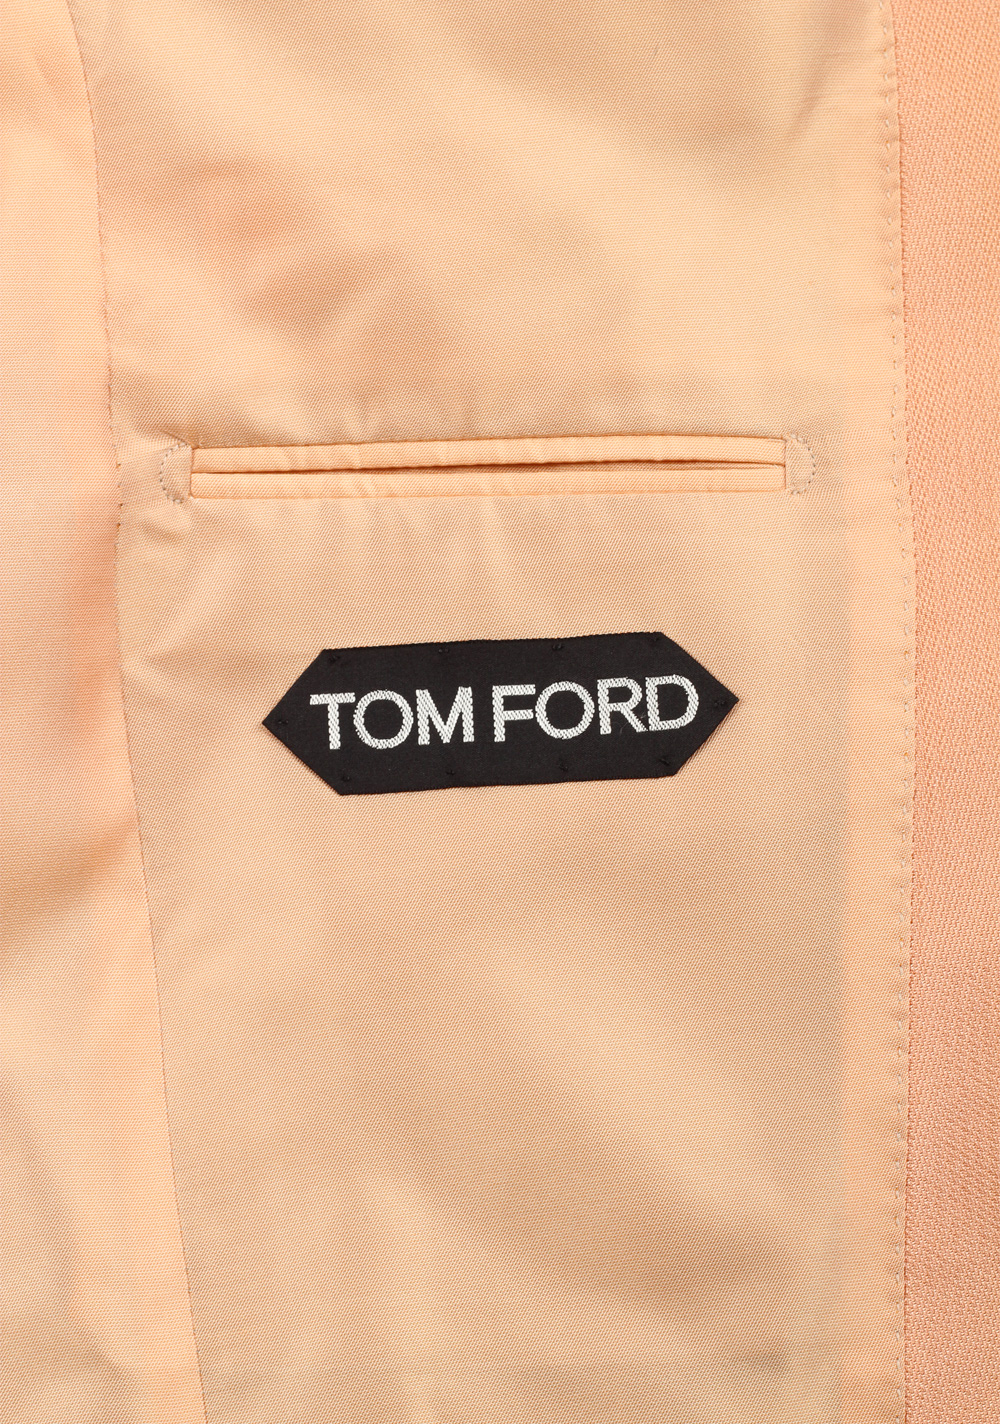 TOM FORD Atticus Salmon Tuxedo Dinner Jacket Size 46 / 36R U.S ...